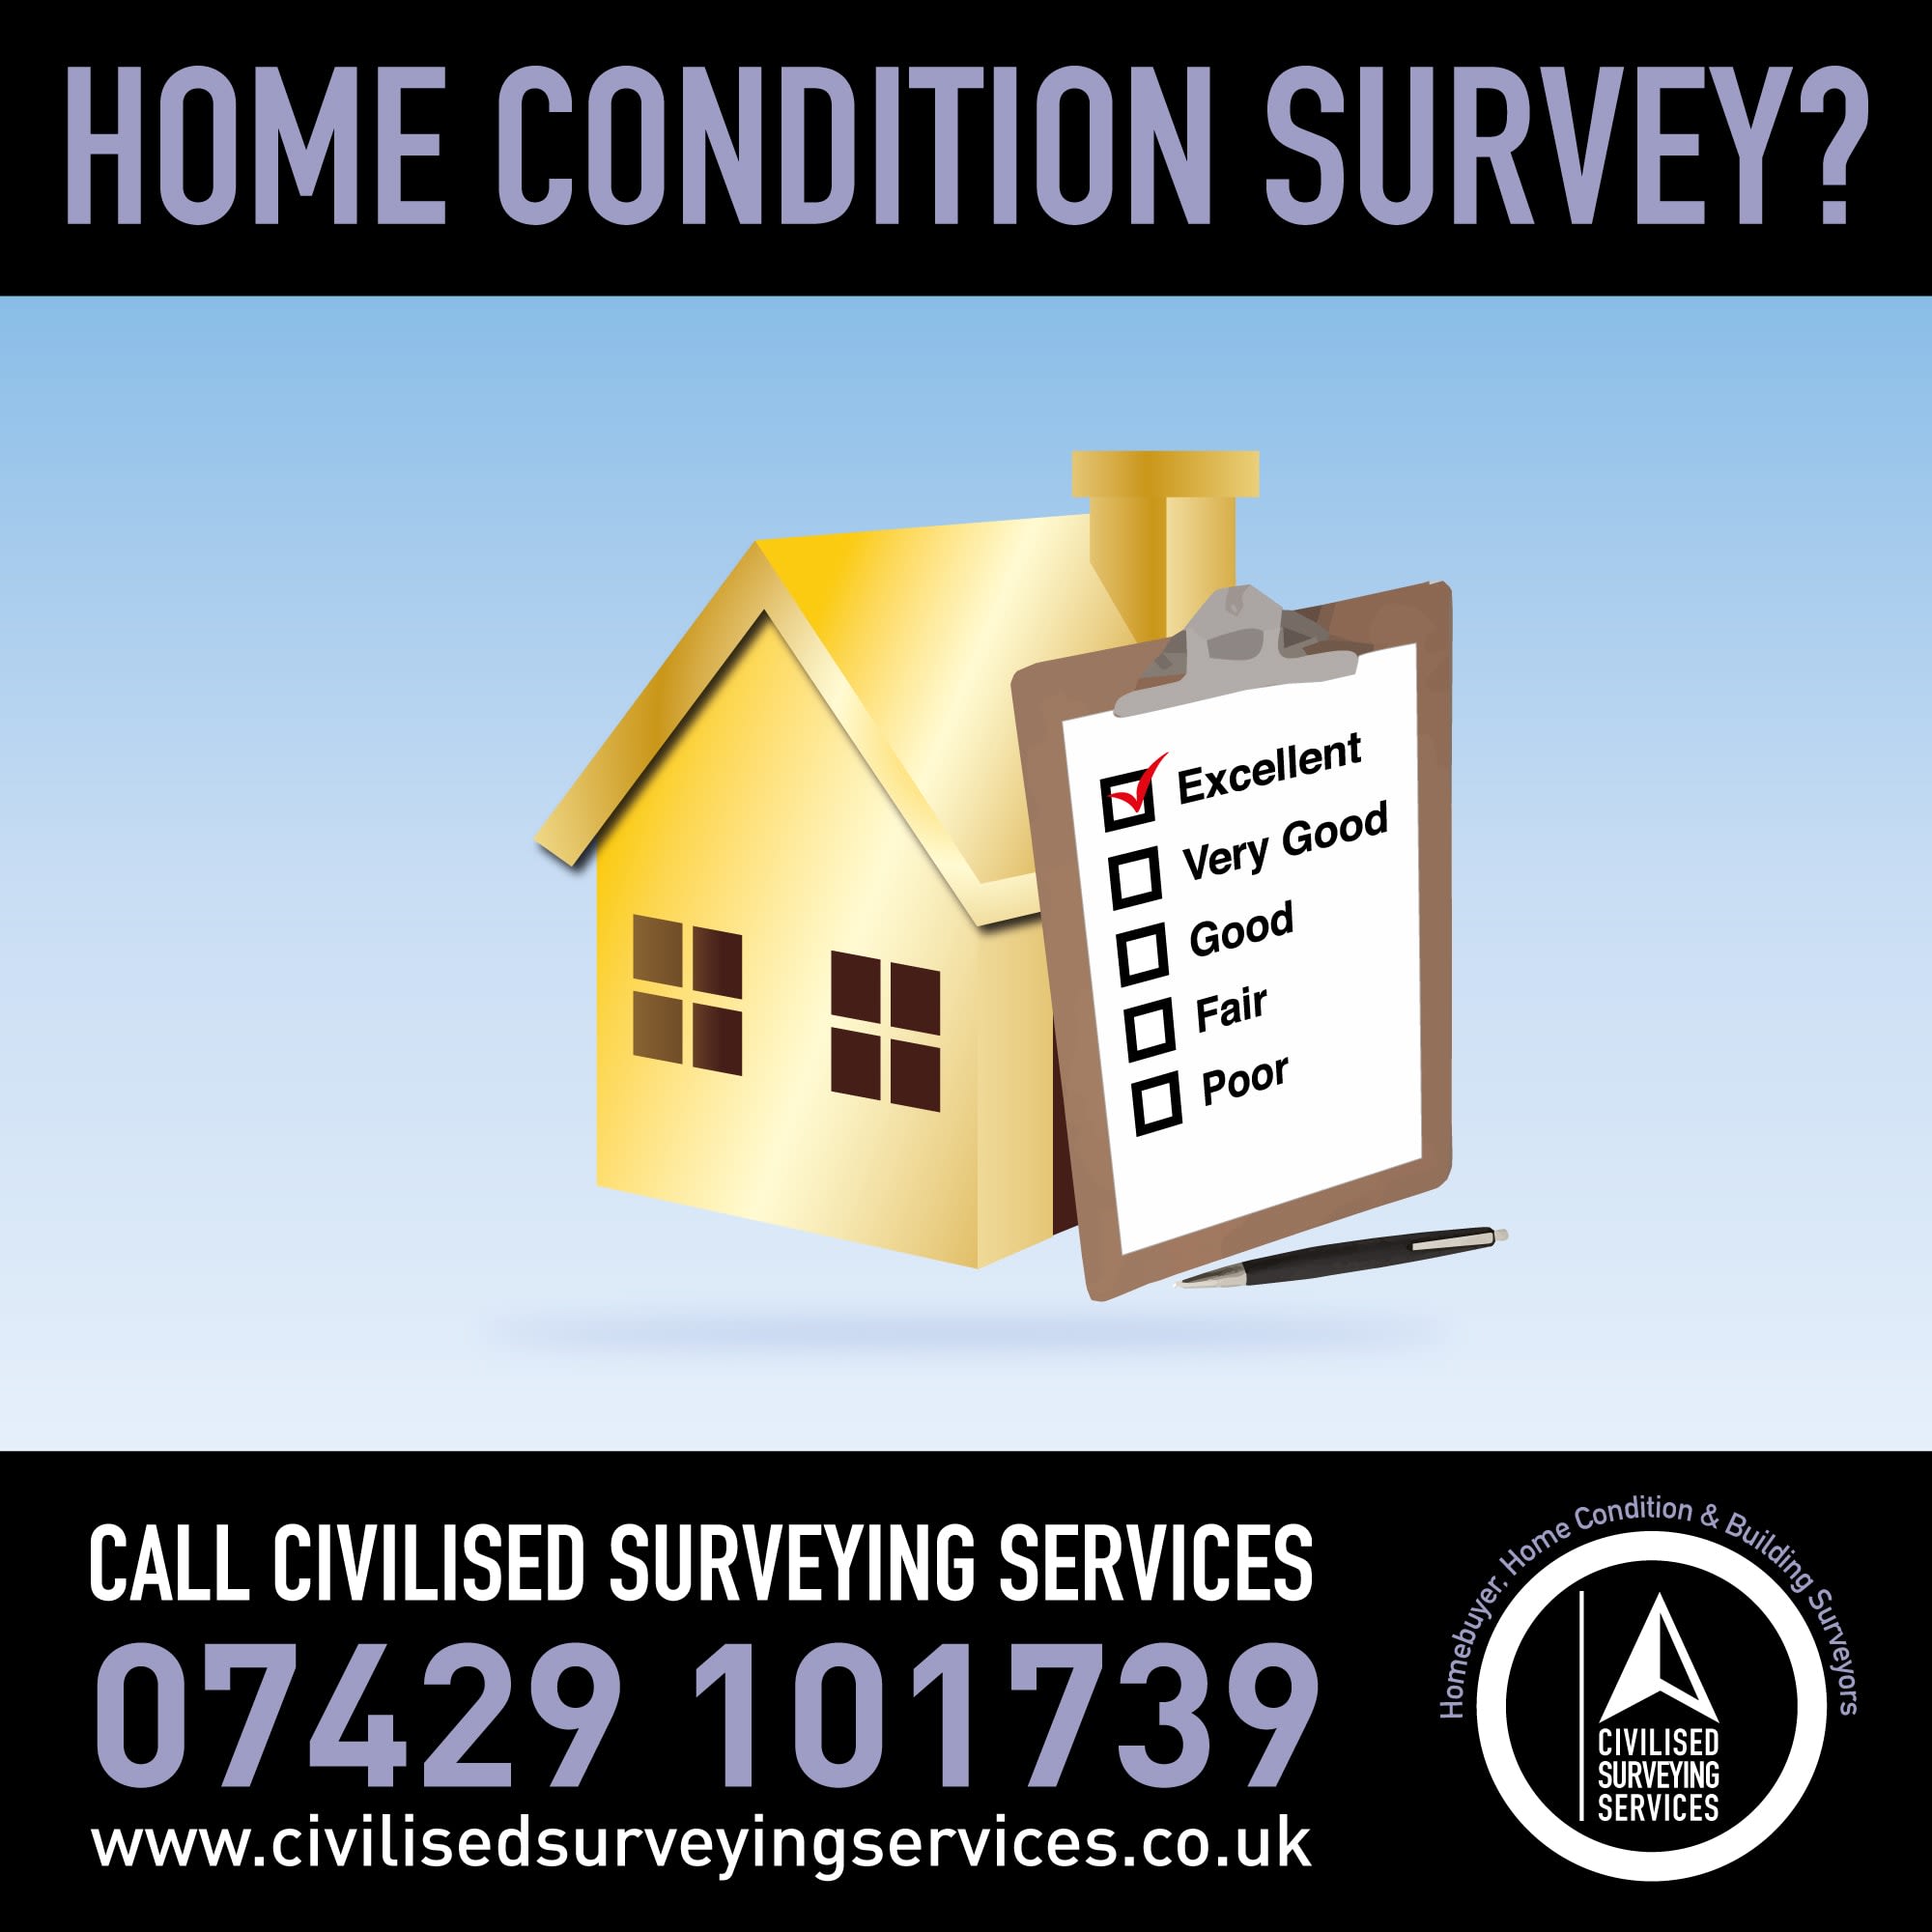 Images Civilised Surveying Services Ltd